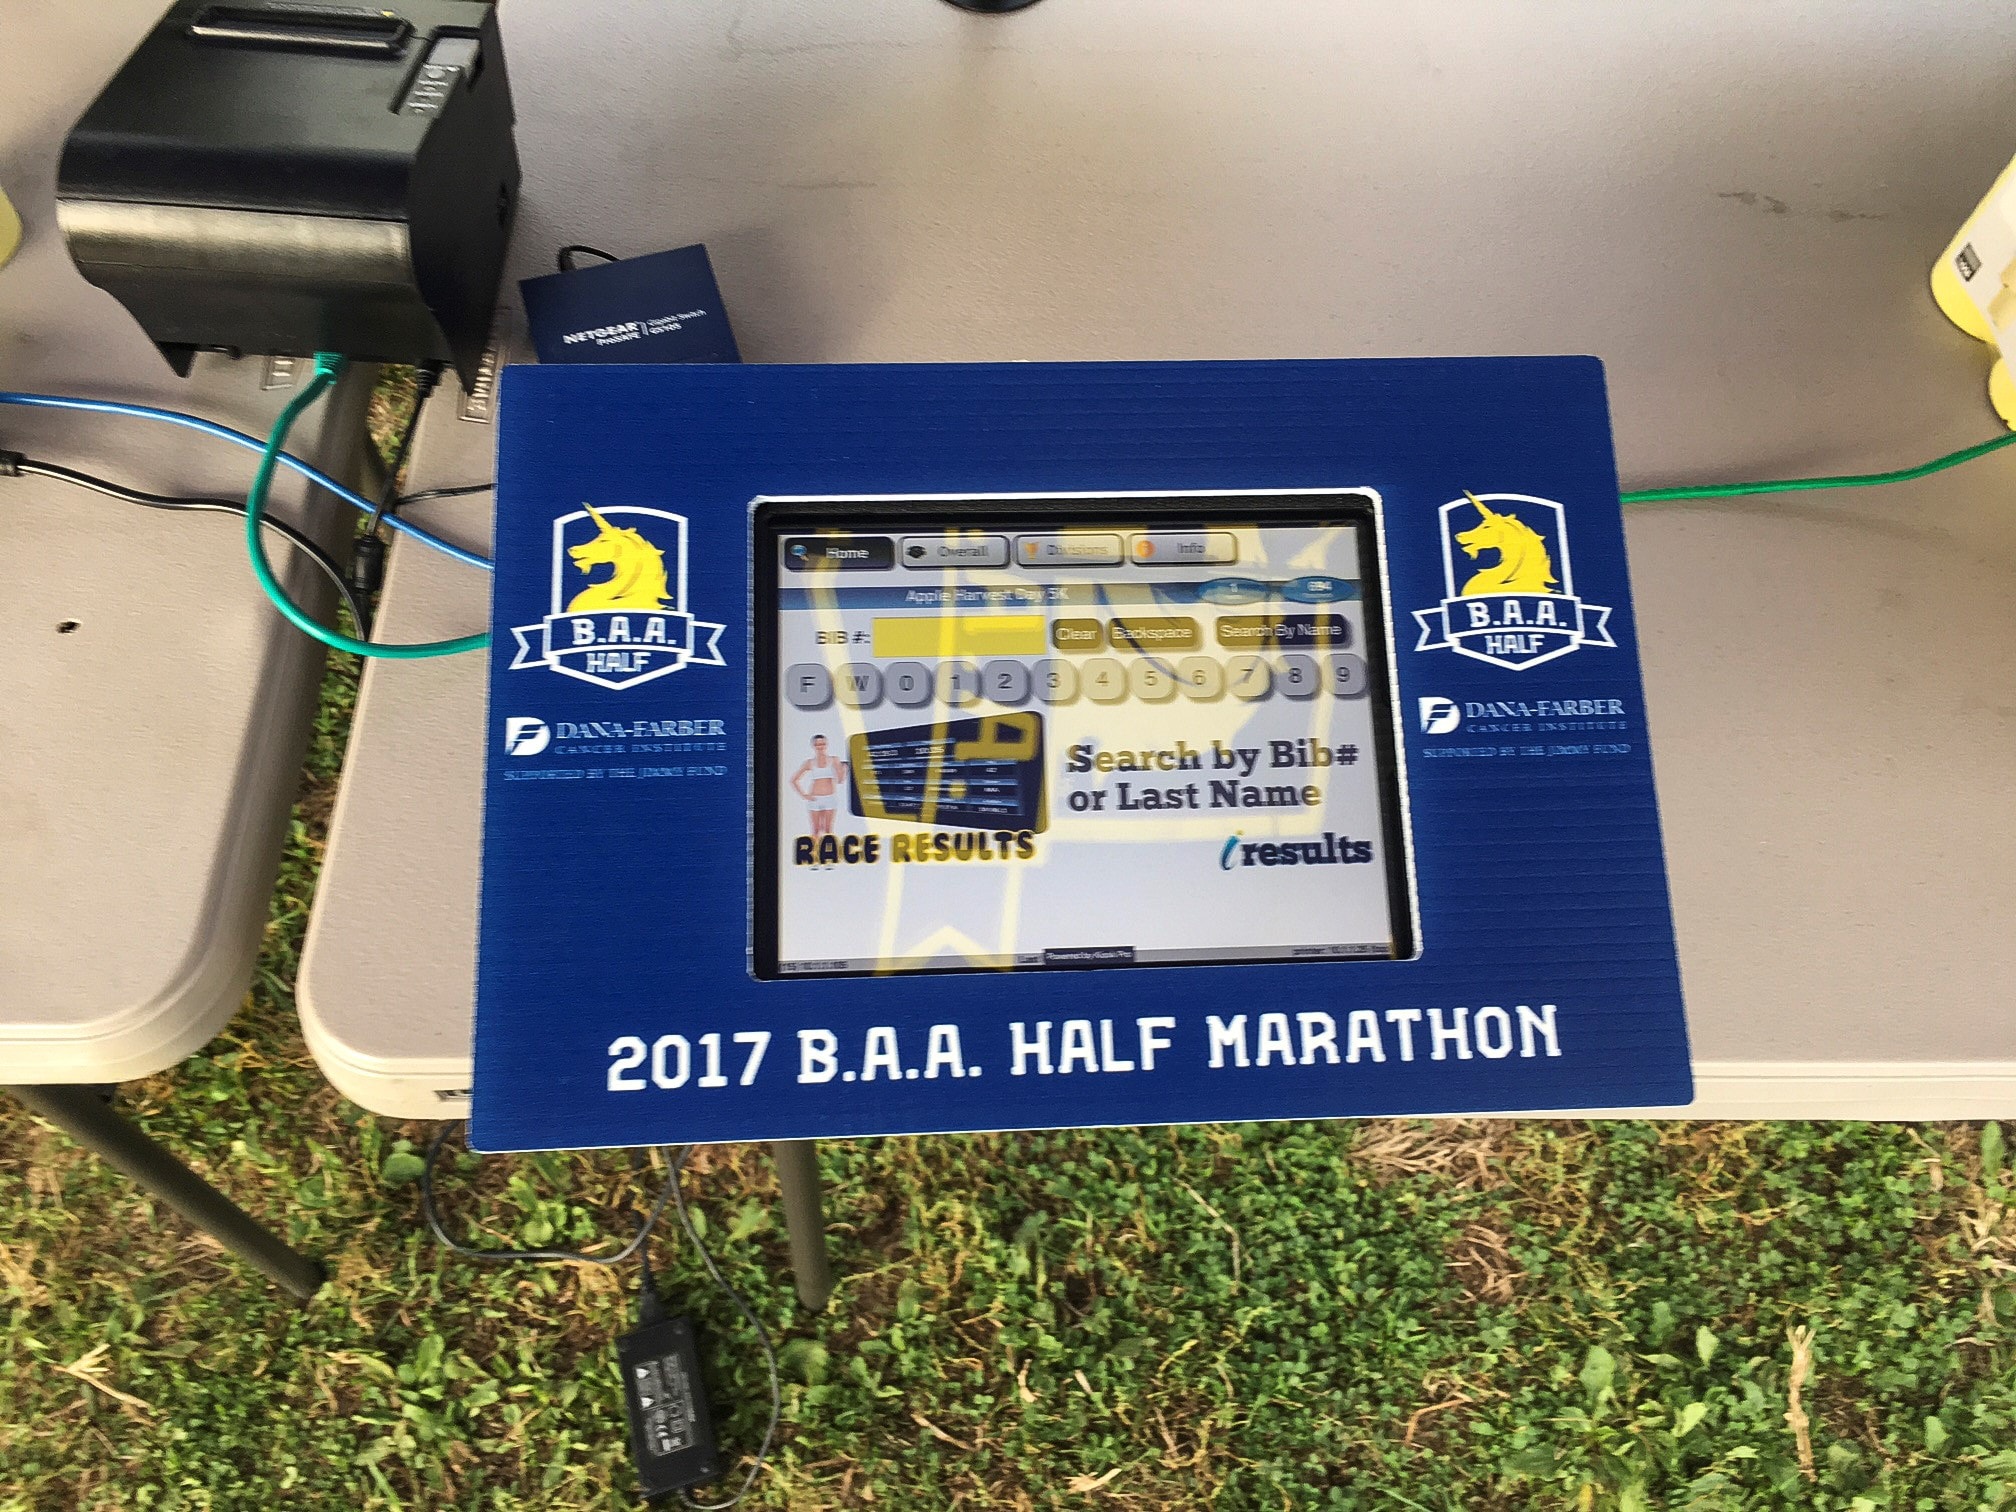 BAA Half Marathon - Coroplast Scanner Signage